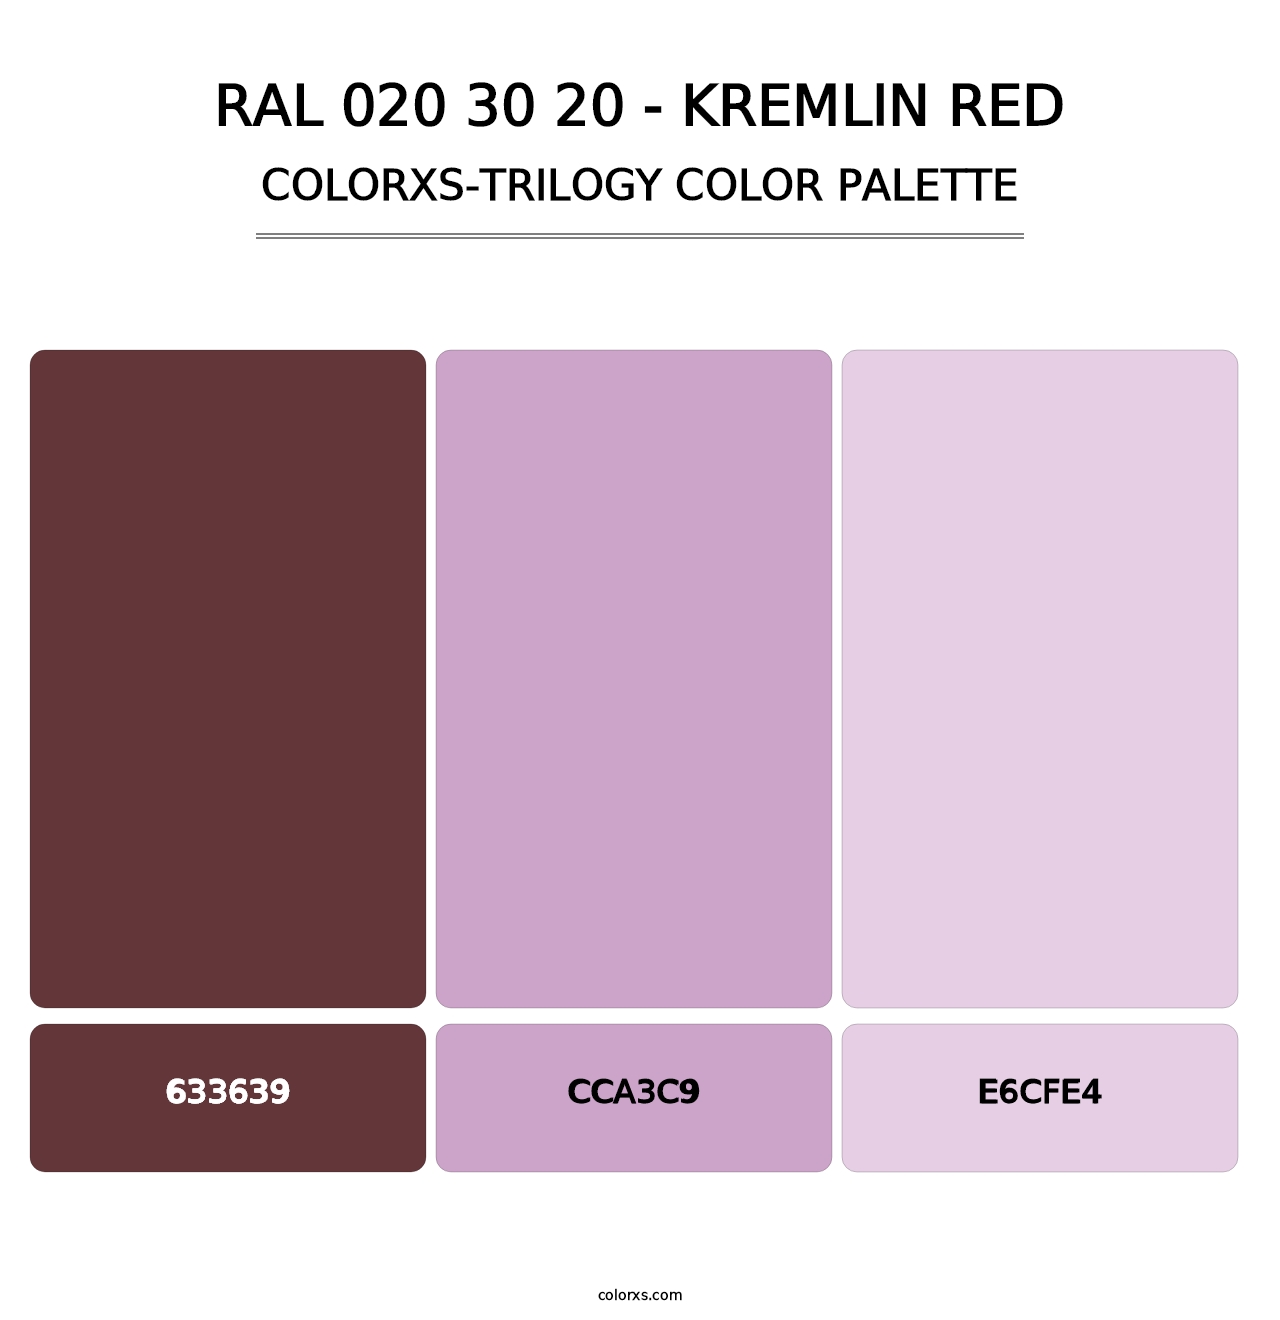 RAL 020 30 20 - Kremlin Red - Colorxs Trilogy Palette